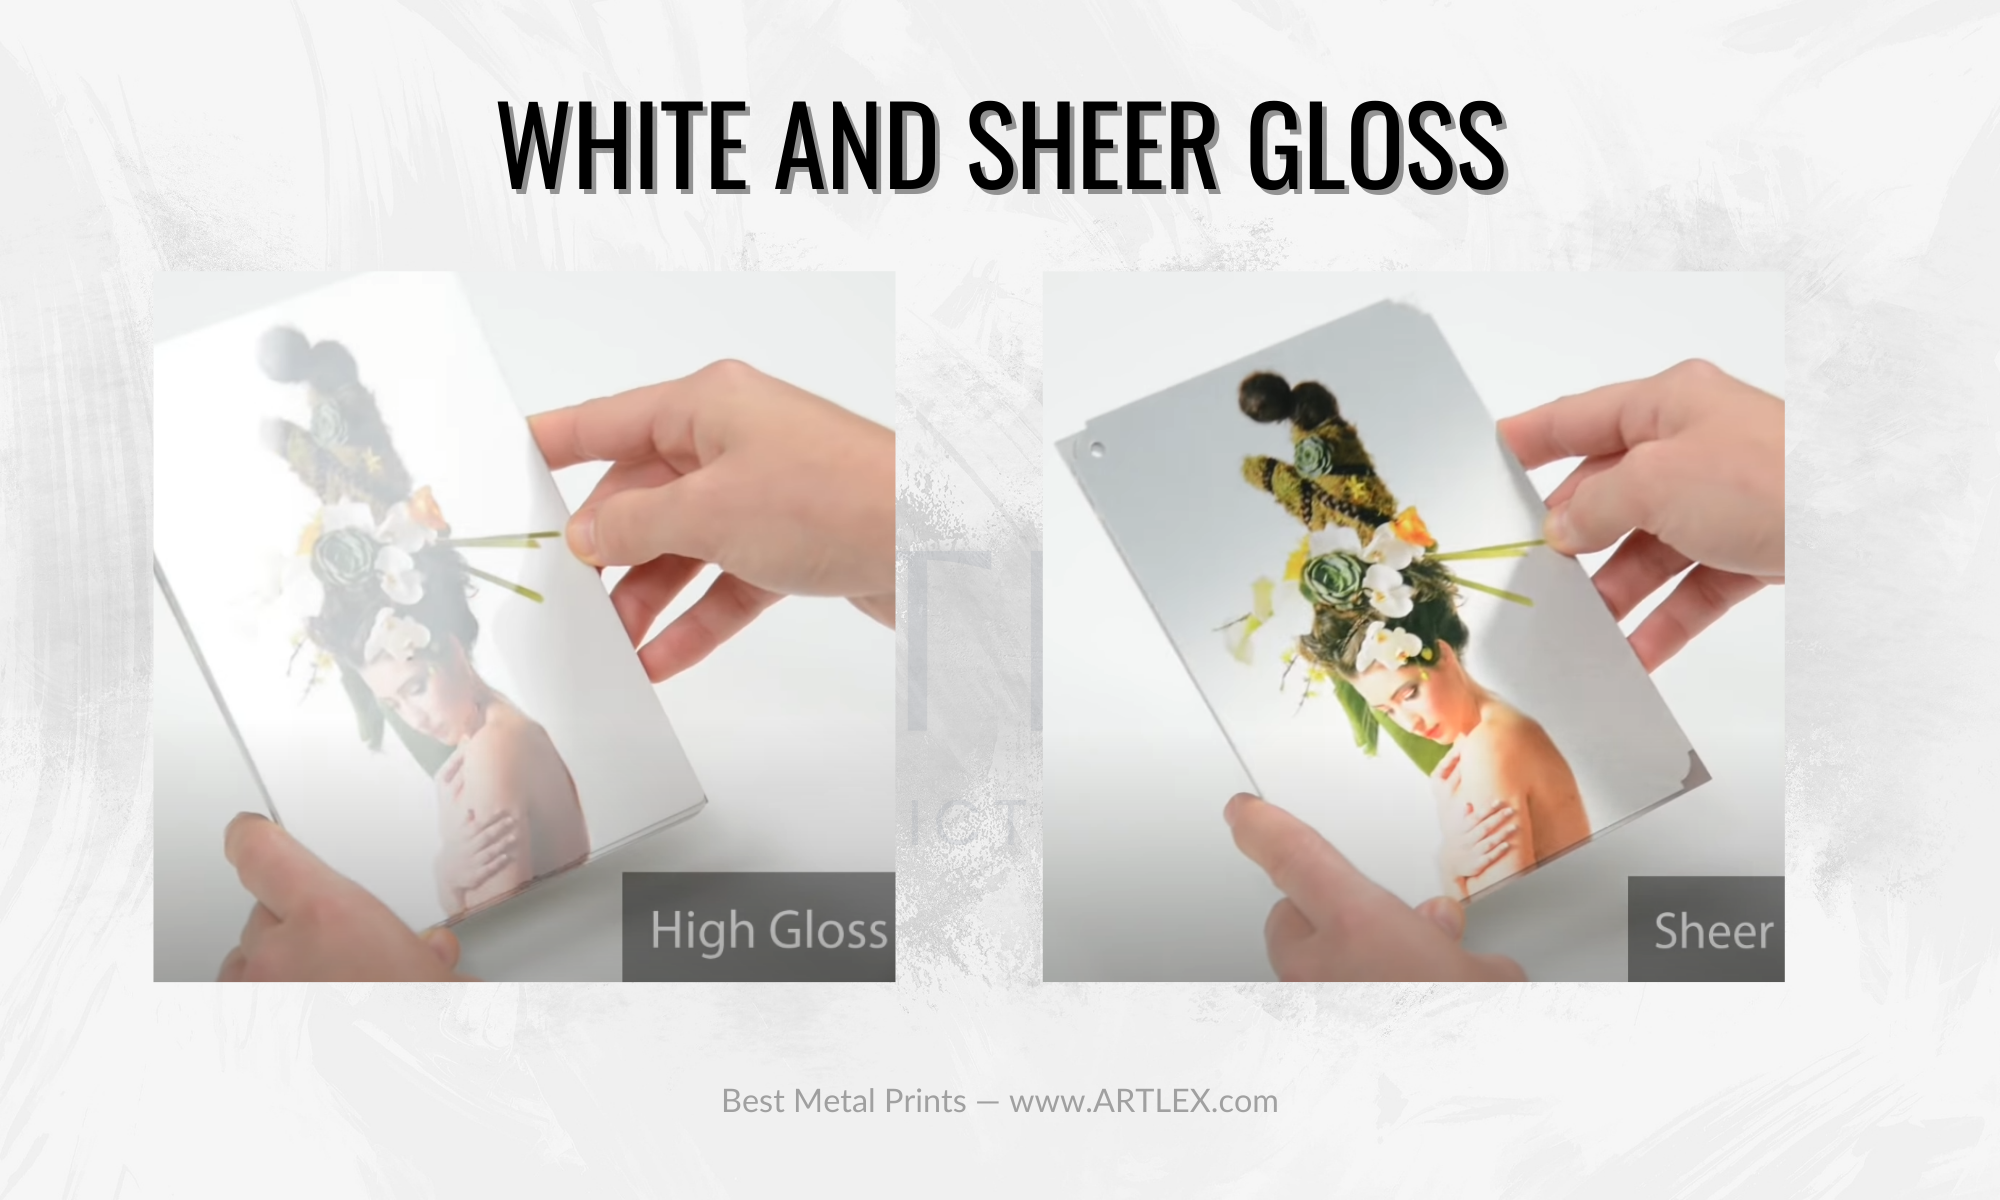 White and Sheer Gloss Metal Prints